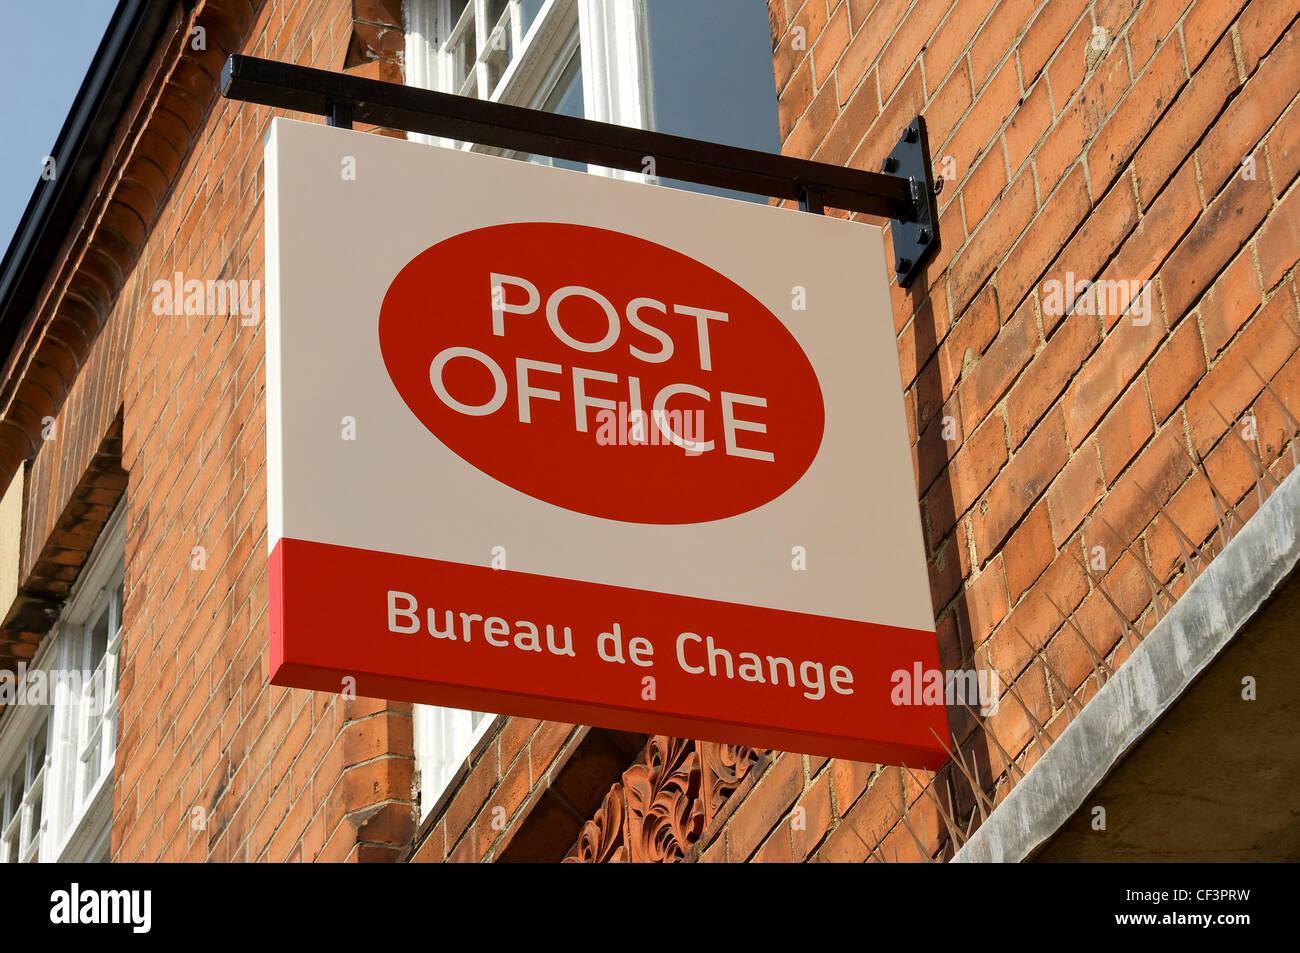 Post office and Bureau de Change sign. Stock Photo